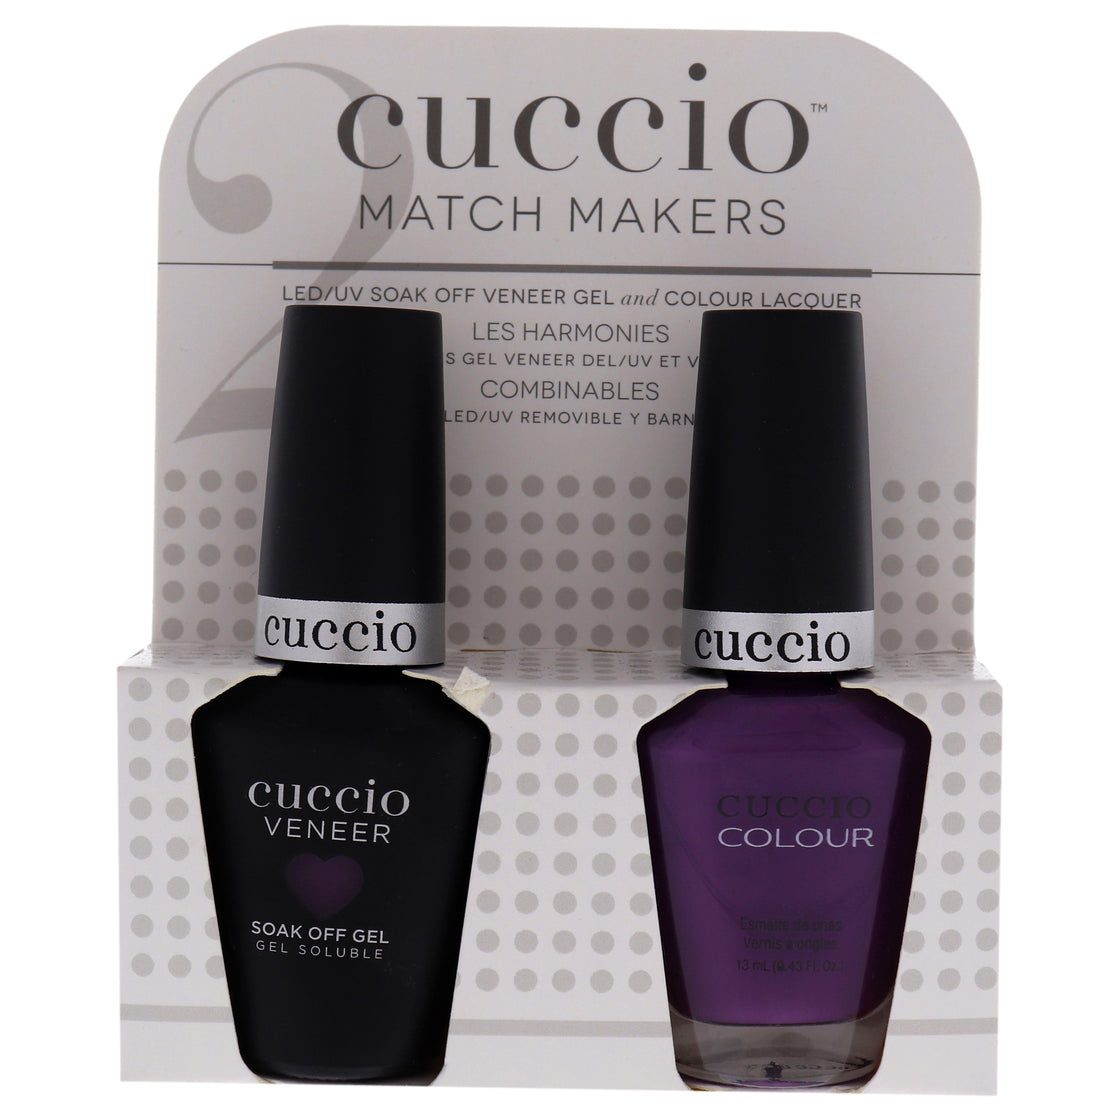 Match Makers Set - Mercury Rising by Cuccio Colour for Women - 2 Pc 0.44oz Veneer Soak Of Gel Nail Polish, 0.43oz Colour Nail Polish